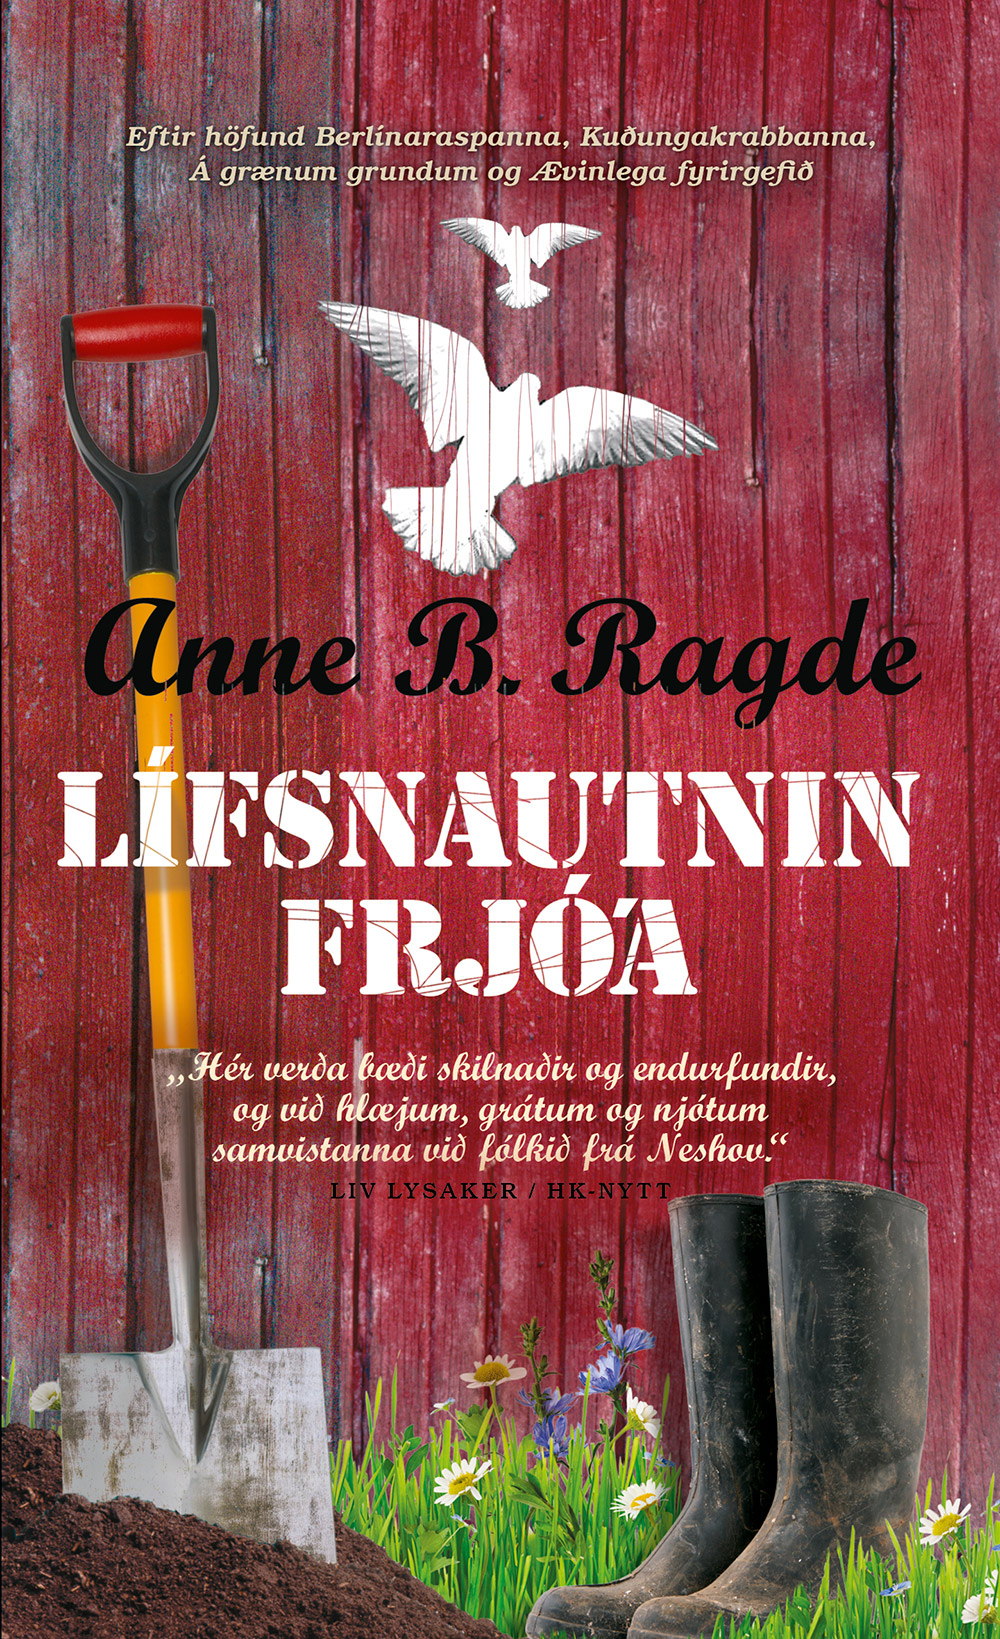 Lífsnautnin frjóa - Anne B. Ragde